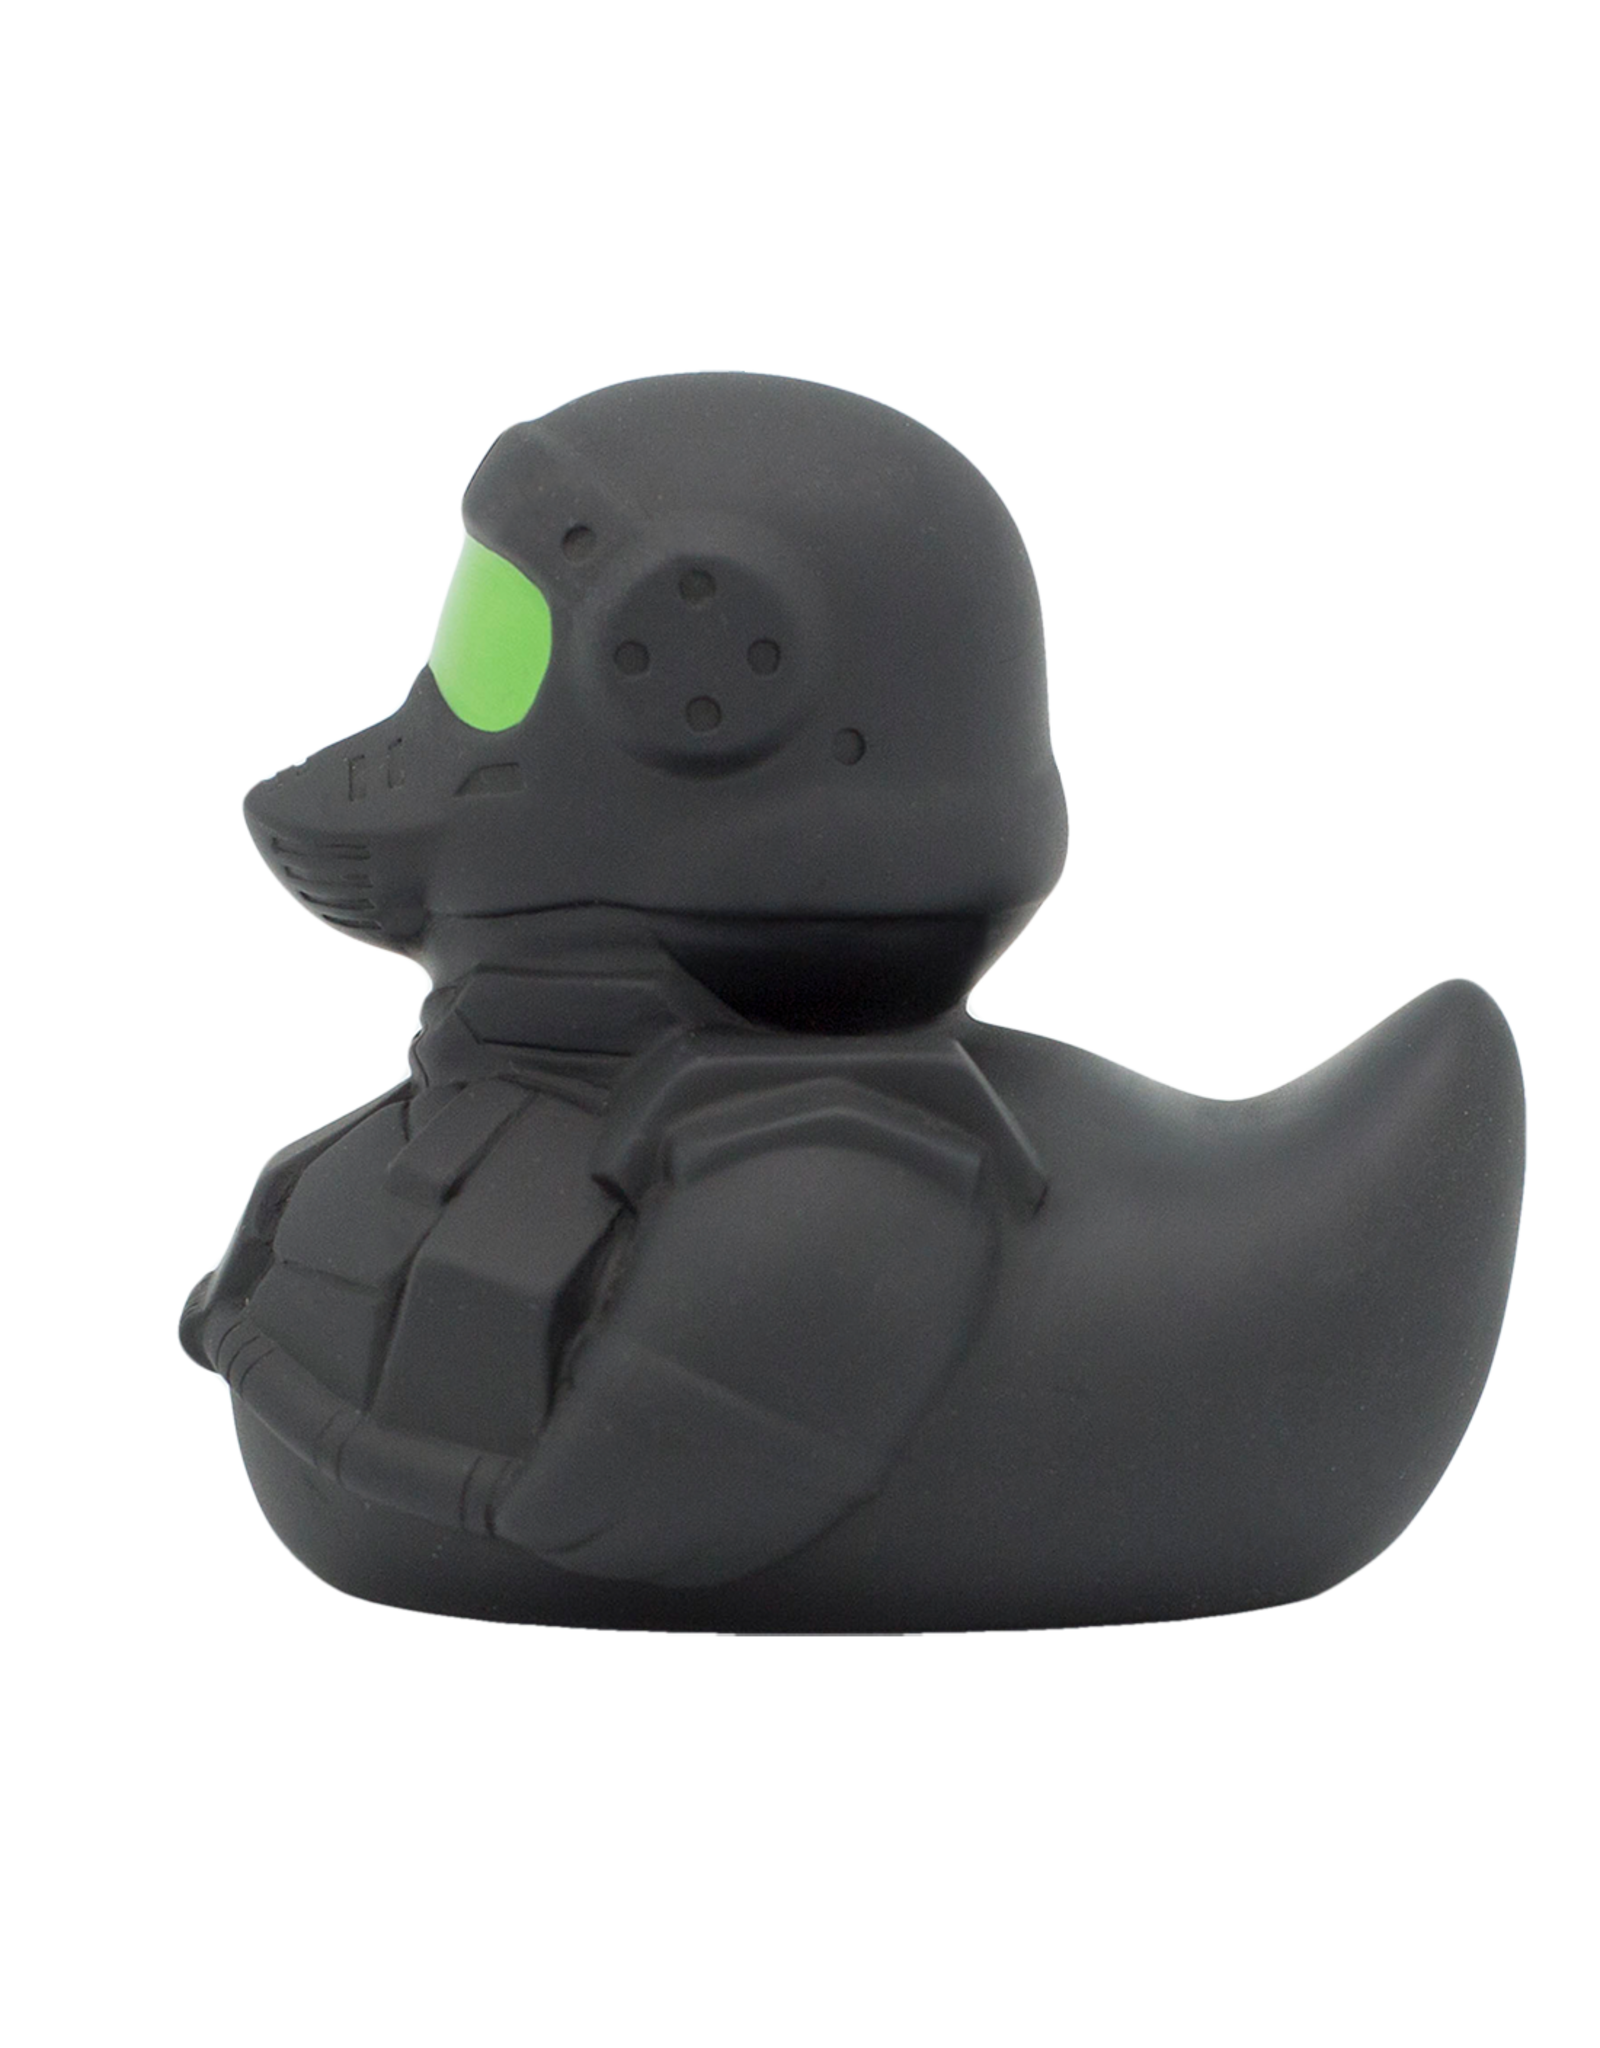 Lilalu Cyber Soldier Rubber Duck